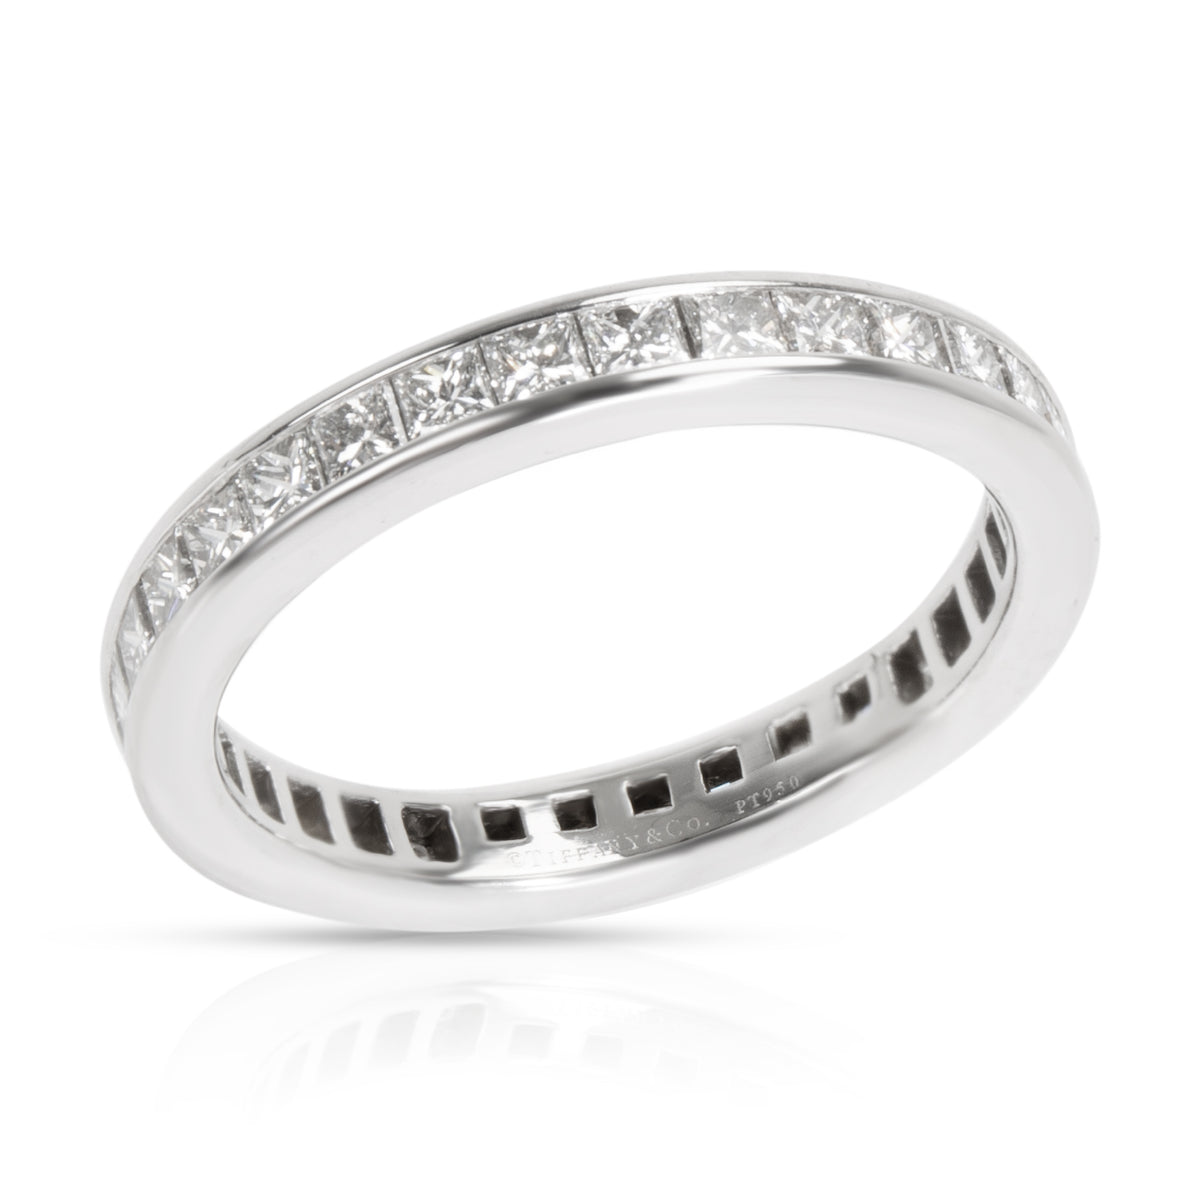 Tiffany & Co Channel Princess Diamond Eternity Wedding Band in Platinum 1.00ctw